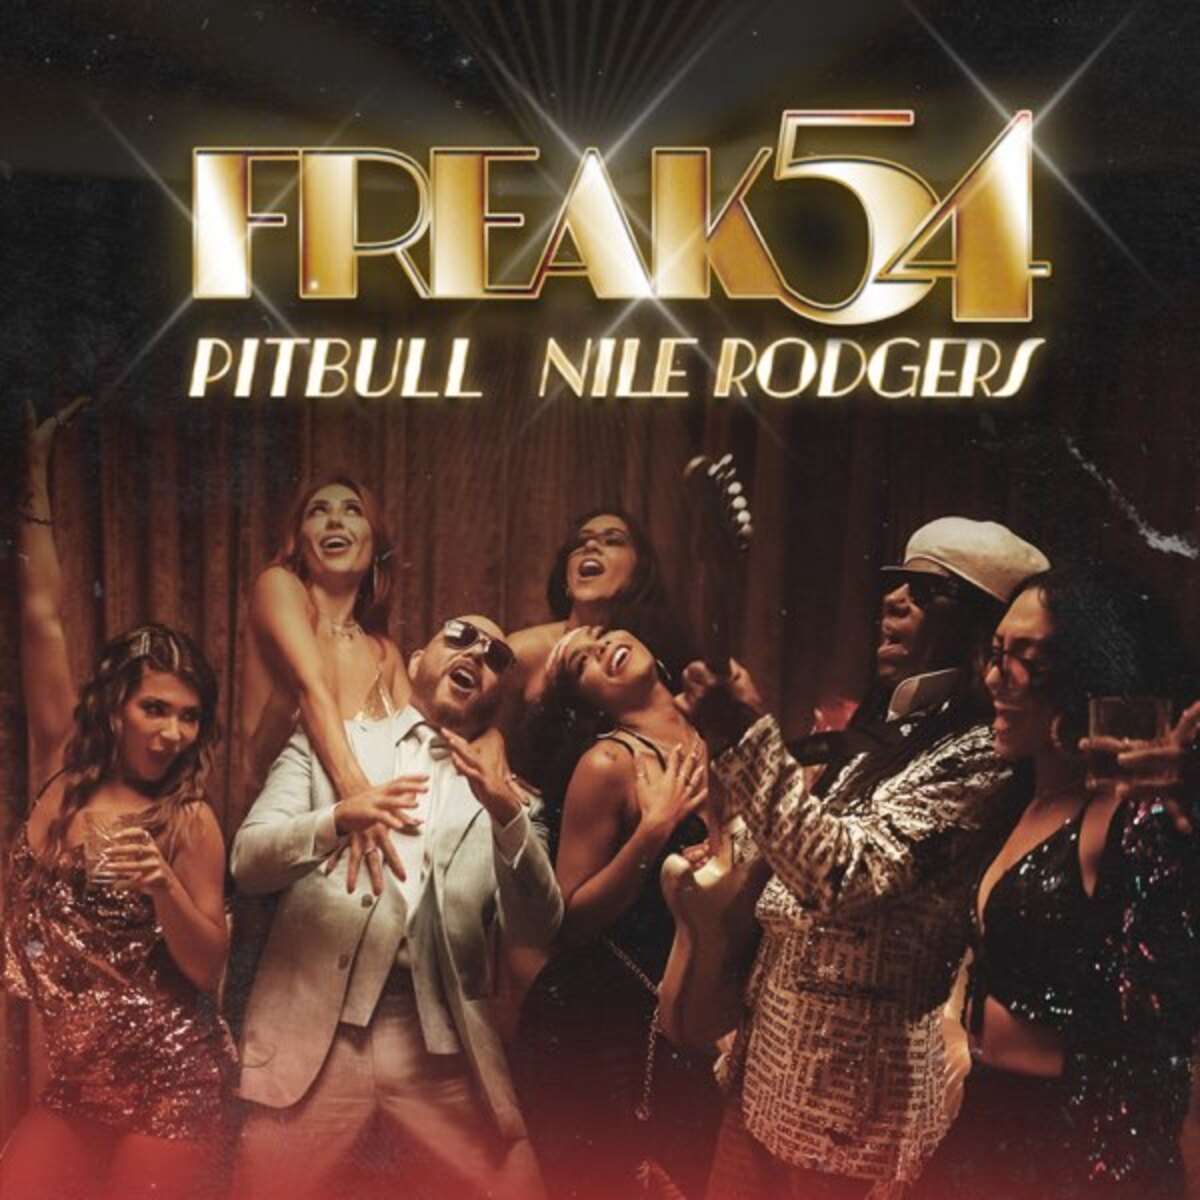 Pitbull, Nile Rodgers - Freak 54 (Freak Out)